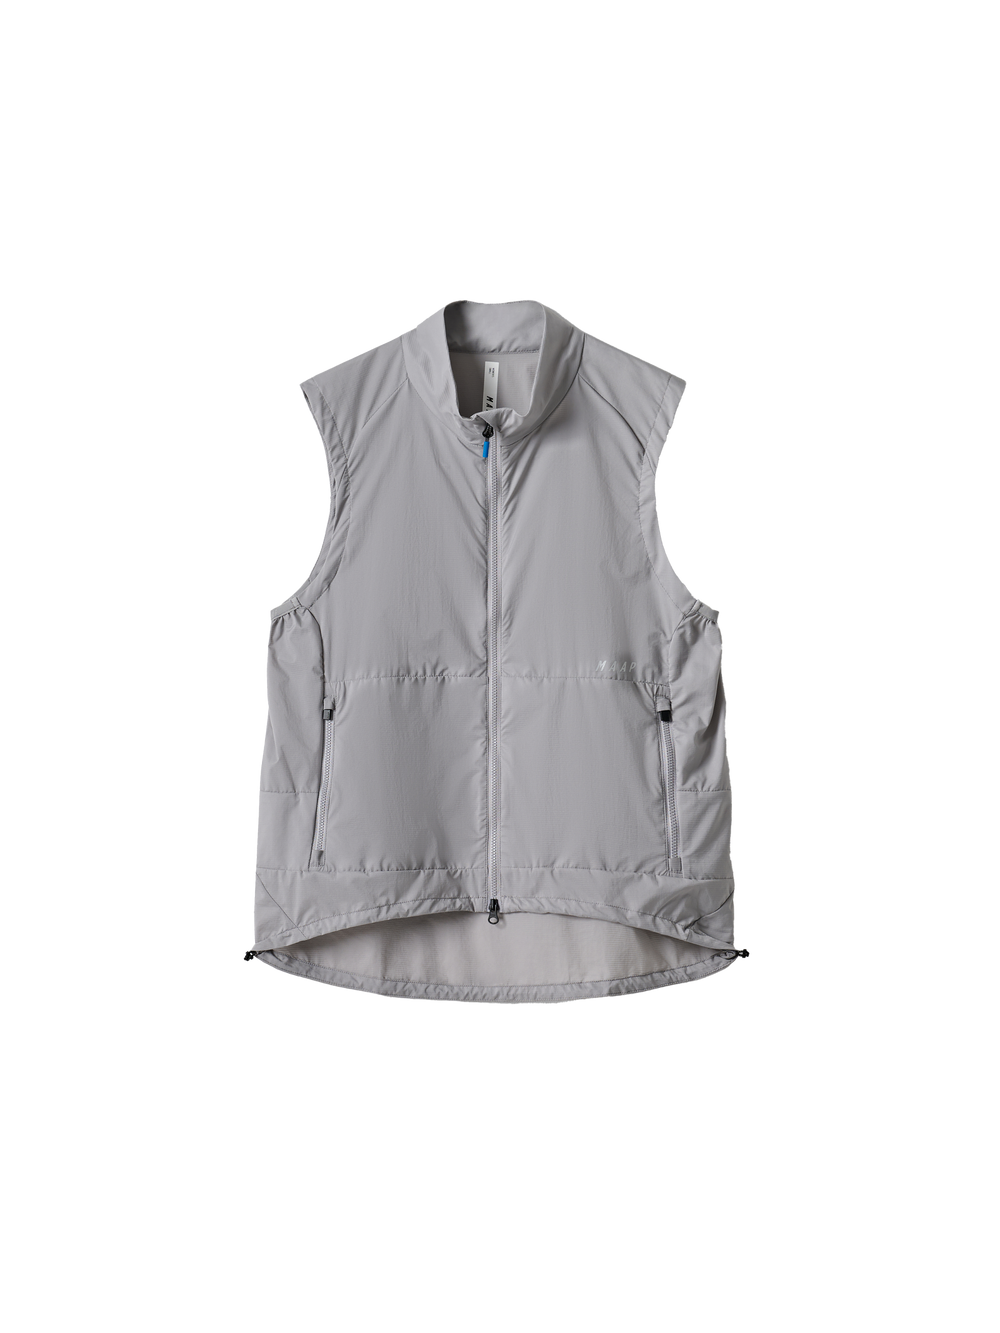 Product Image for Women's Alt_Road Wind Vest